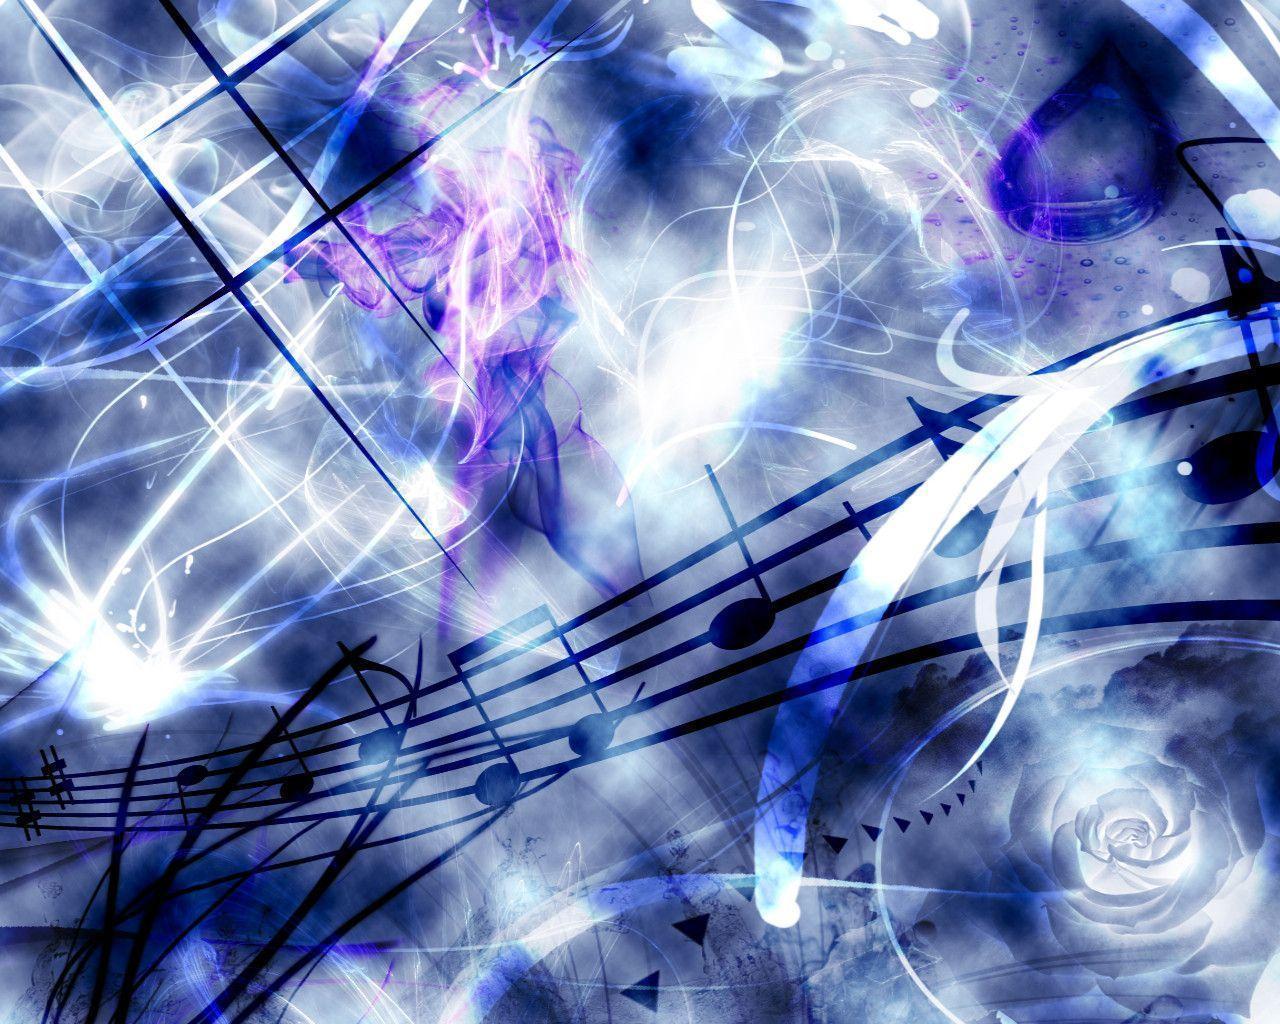 Abstract Music Image 6 HD Wallpaper. lzamgs